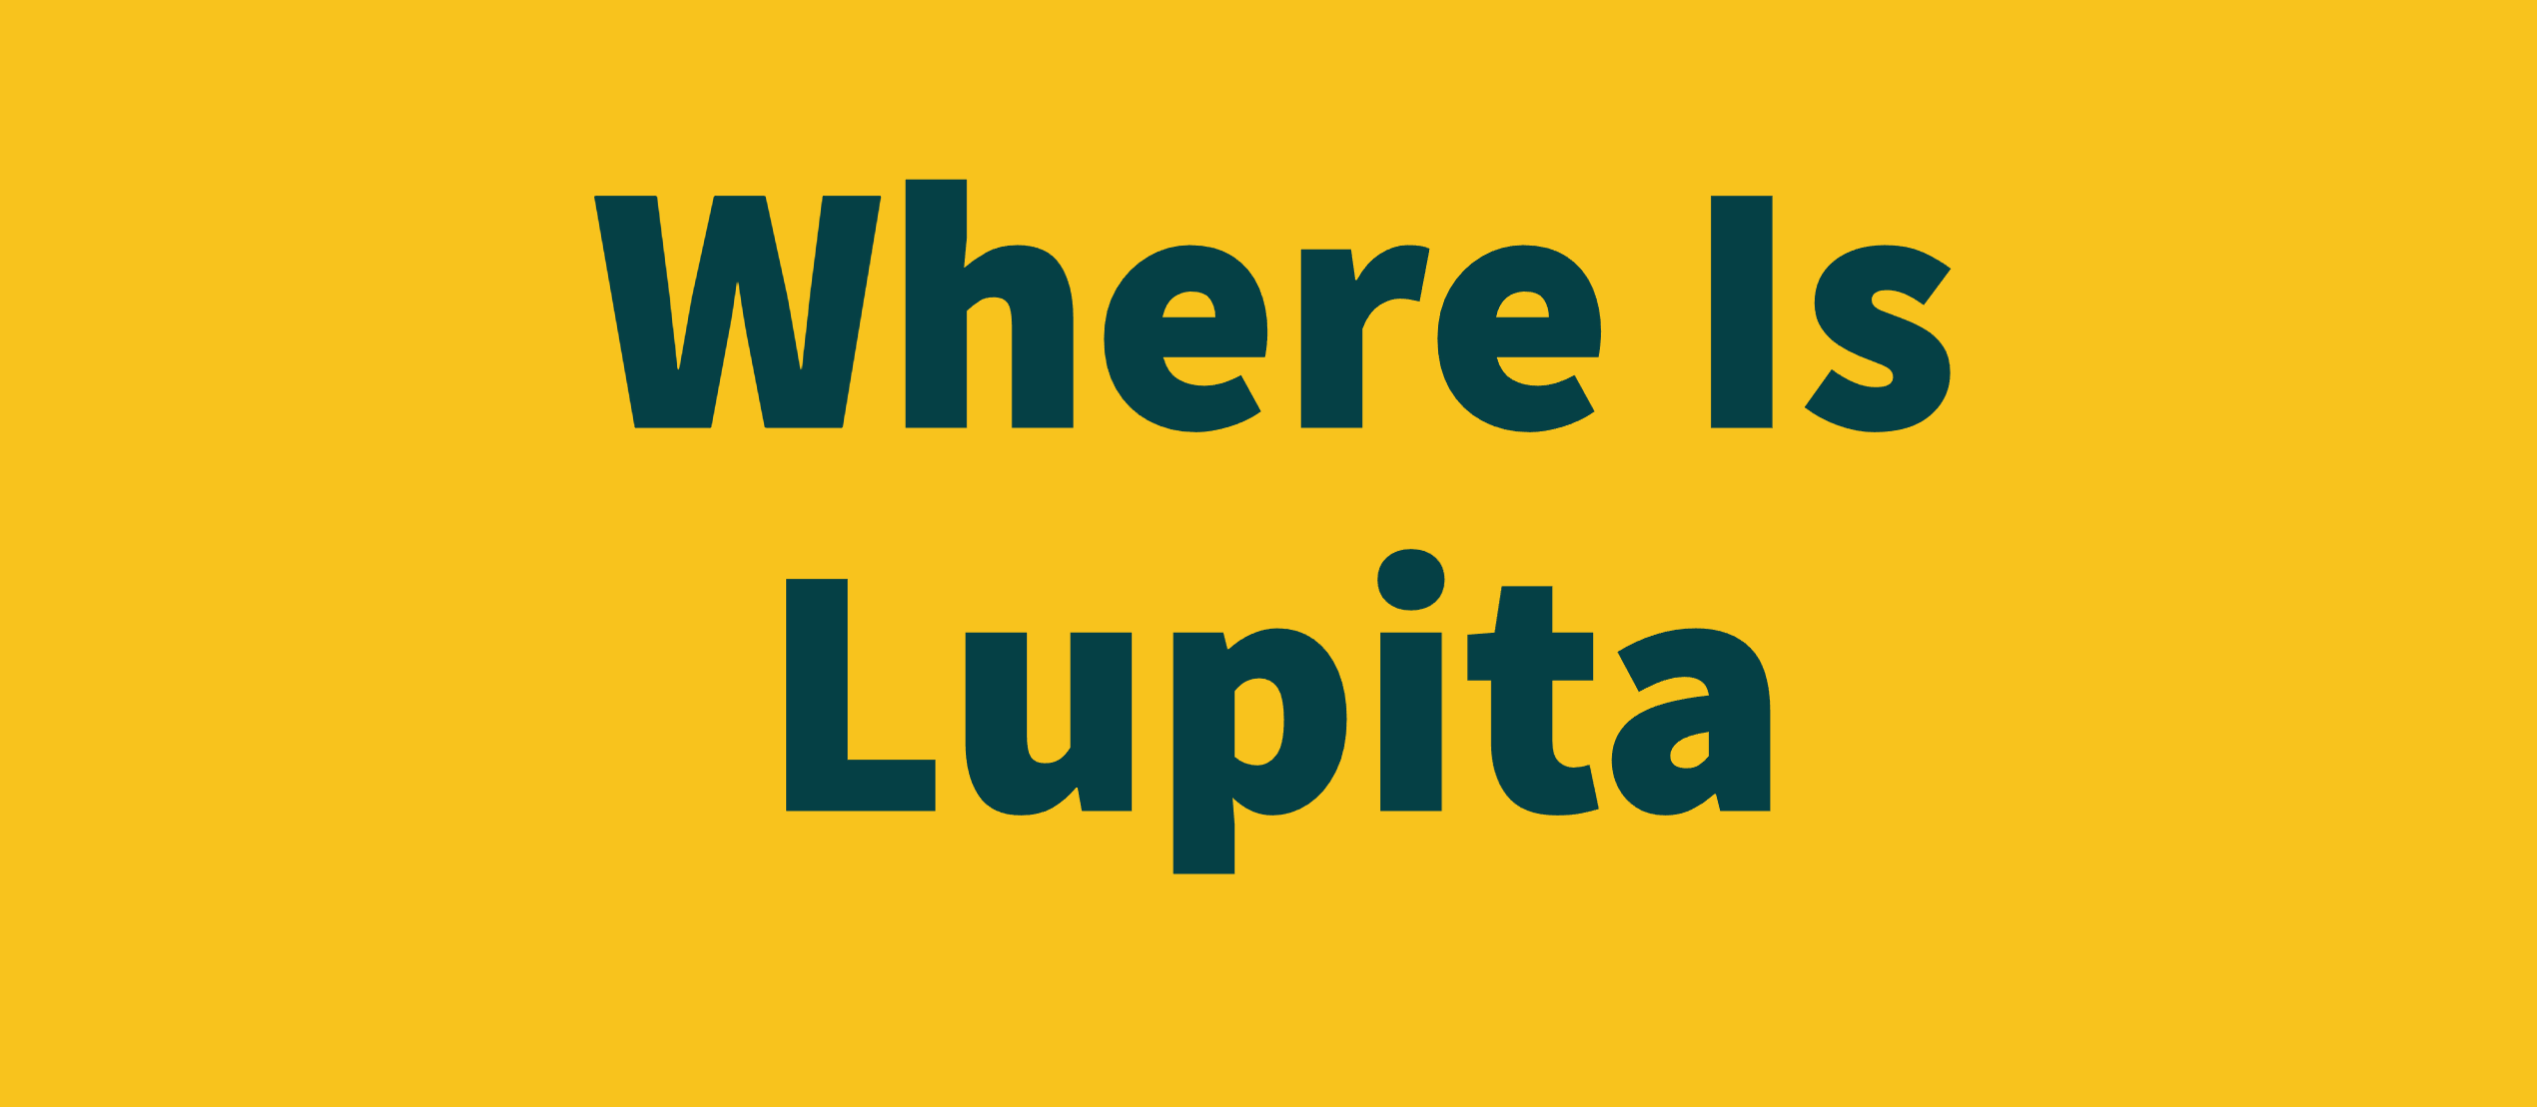 Where Is Lupita